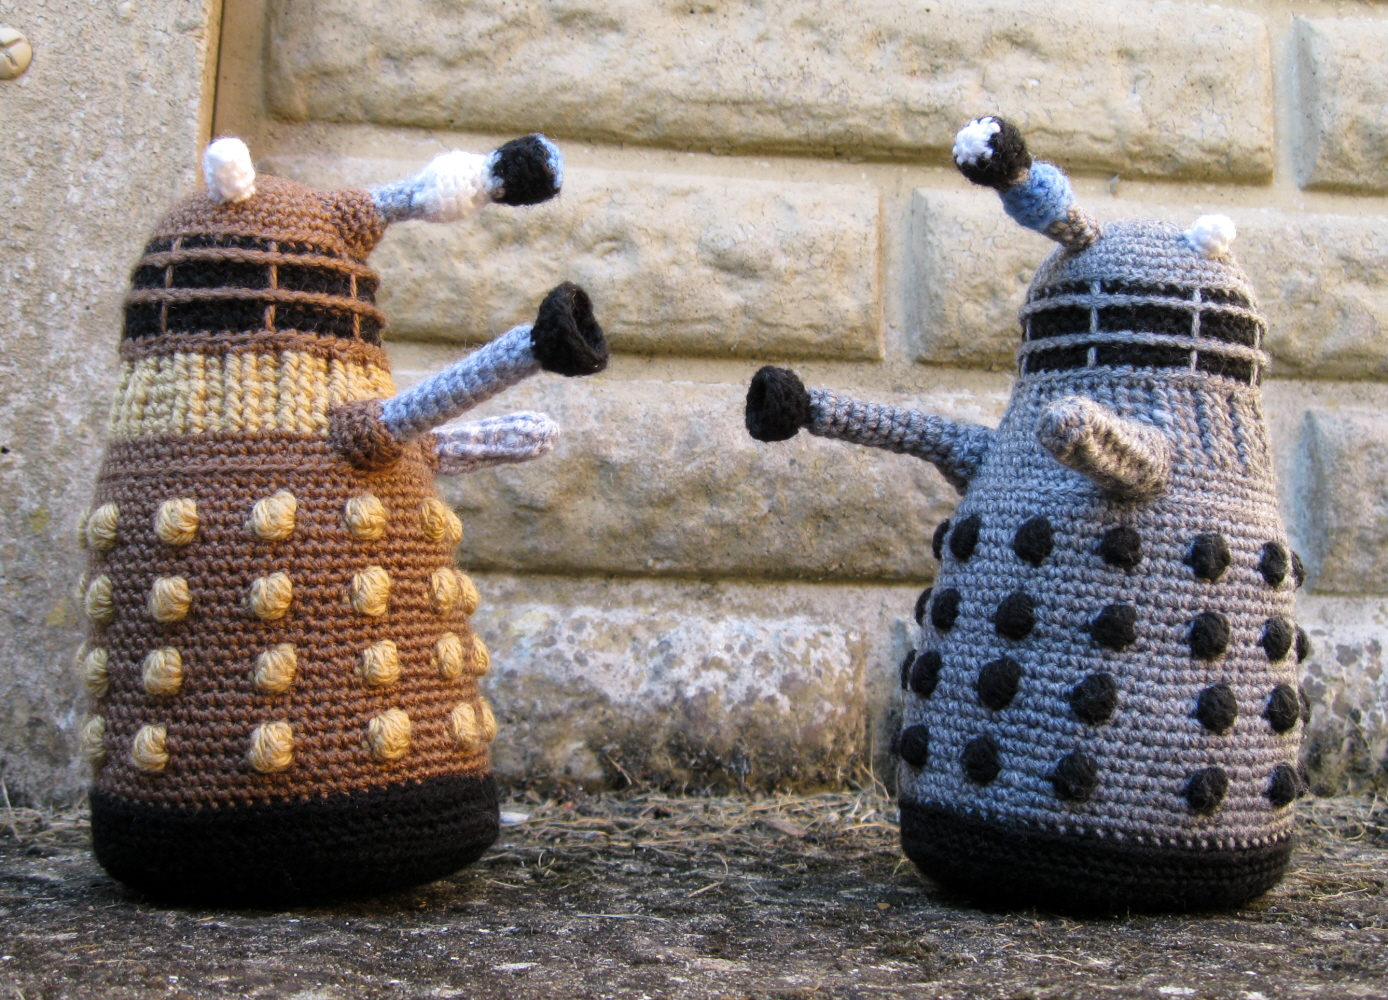 Knitted Dalek Pattern Lucyravenscar Crochet Creatures Dalek Amigurumi Pattern Free